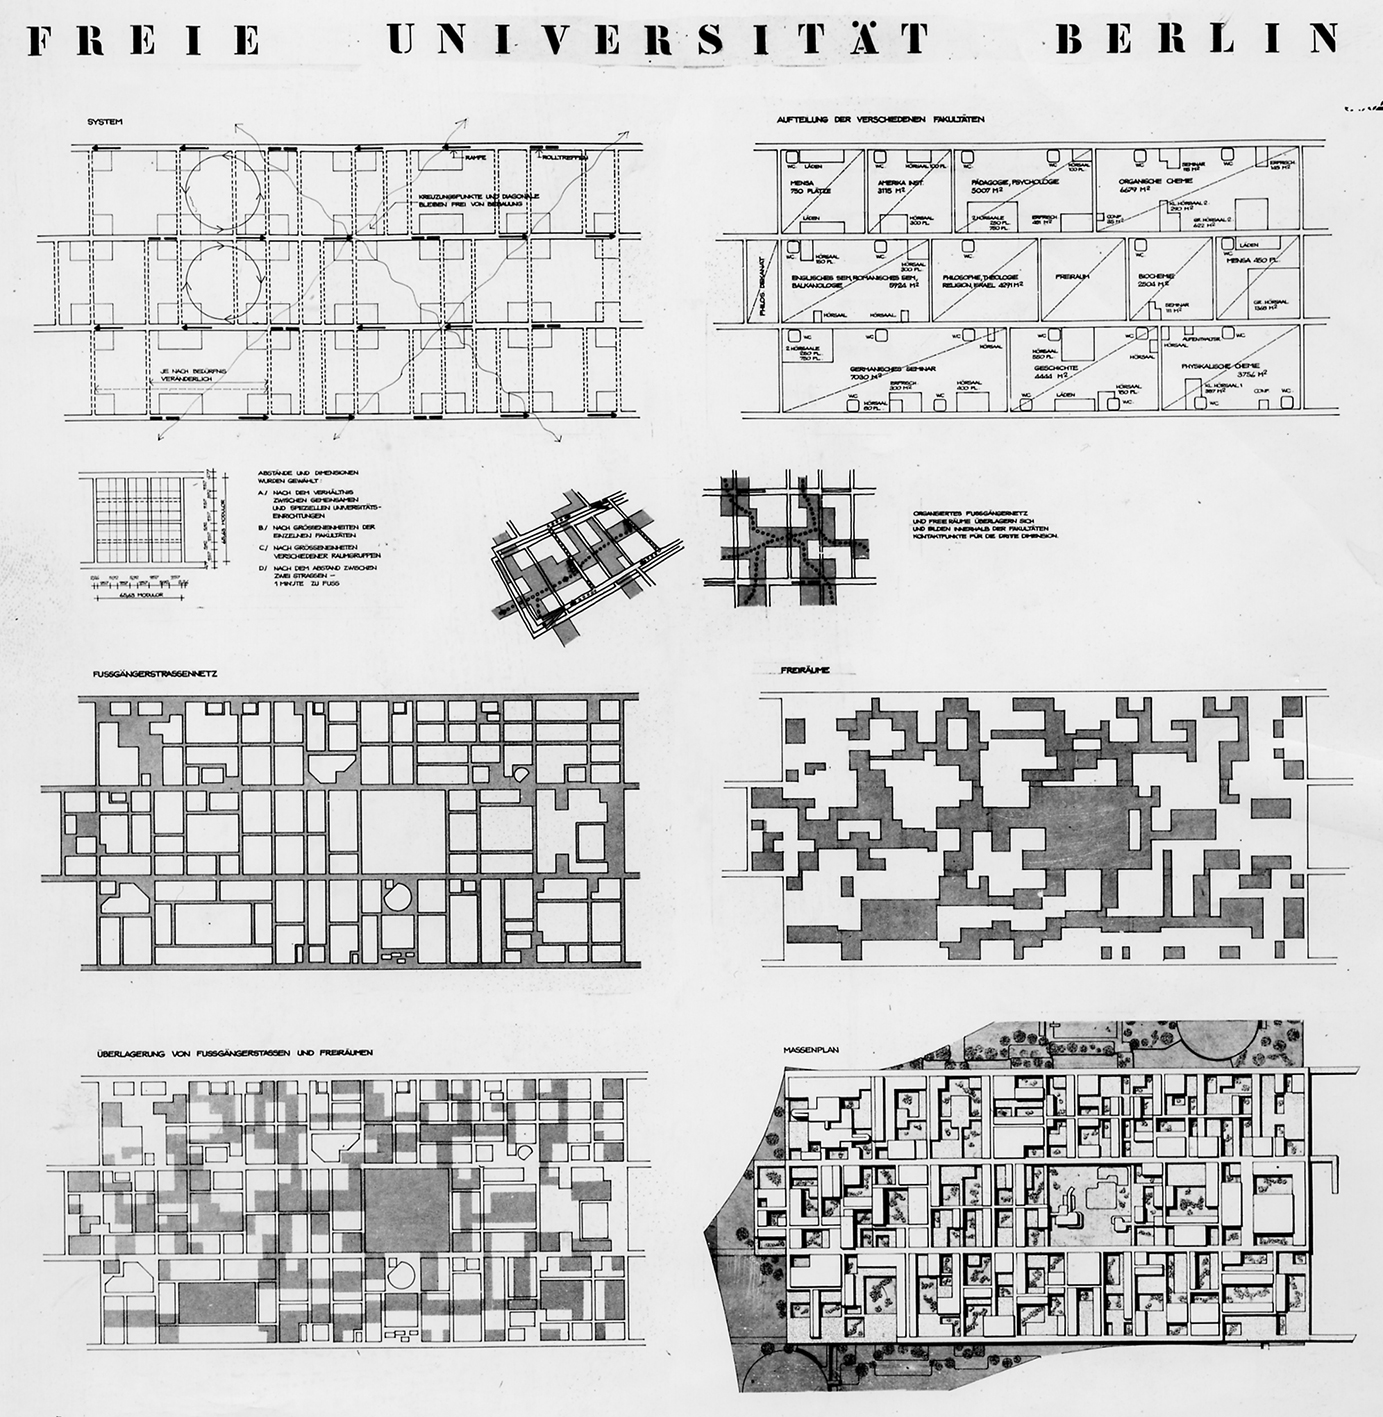 Public university, Berlin, 1965–1973 (G. Candilis, A. Josic, S. Woods and M. Schiedhelm, architects).